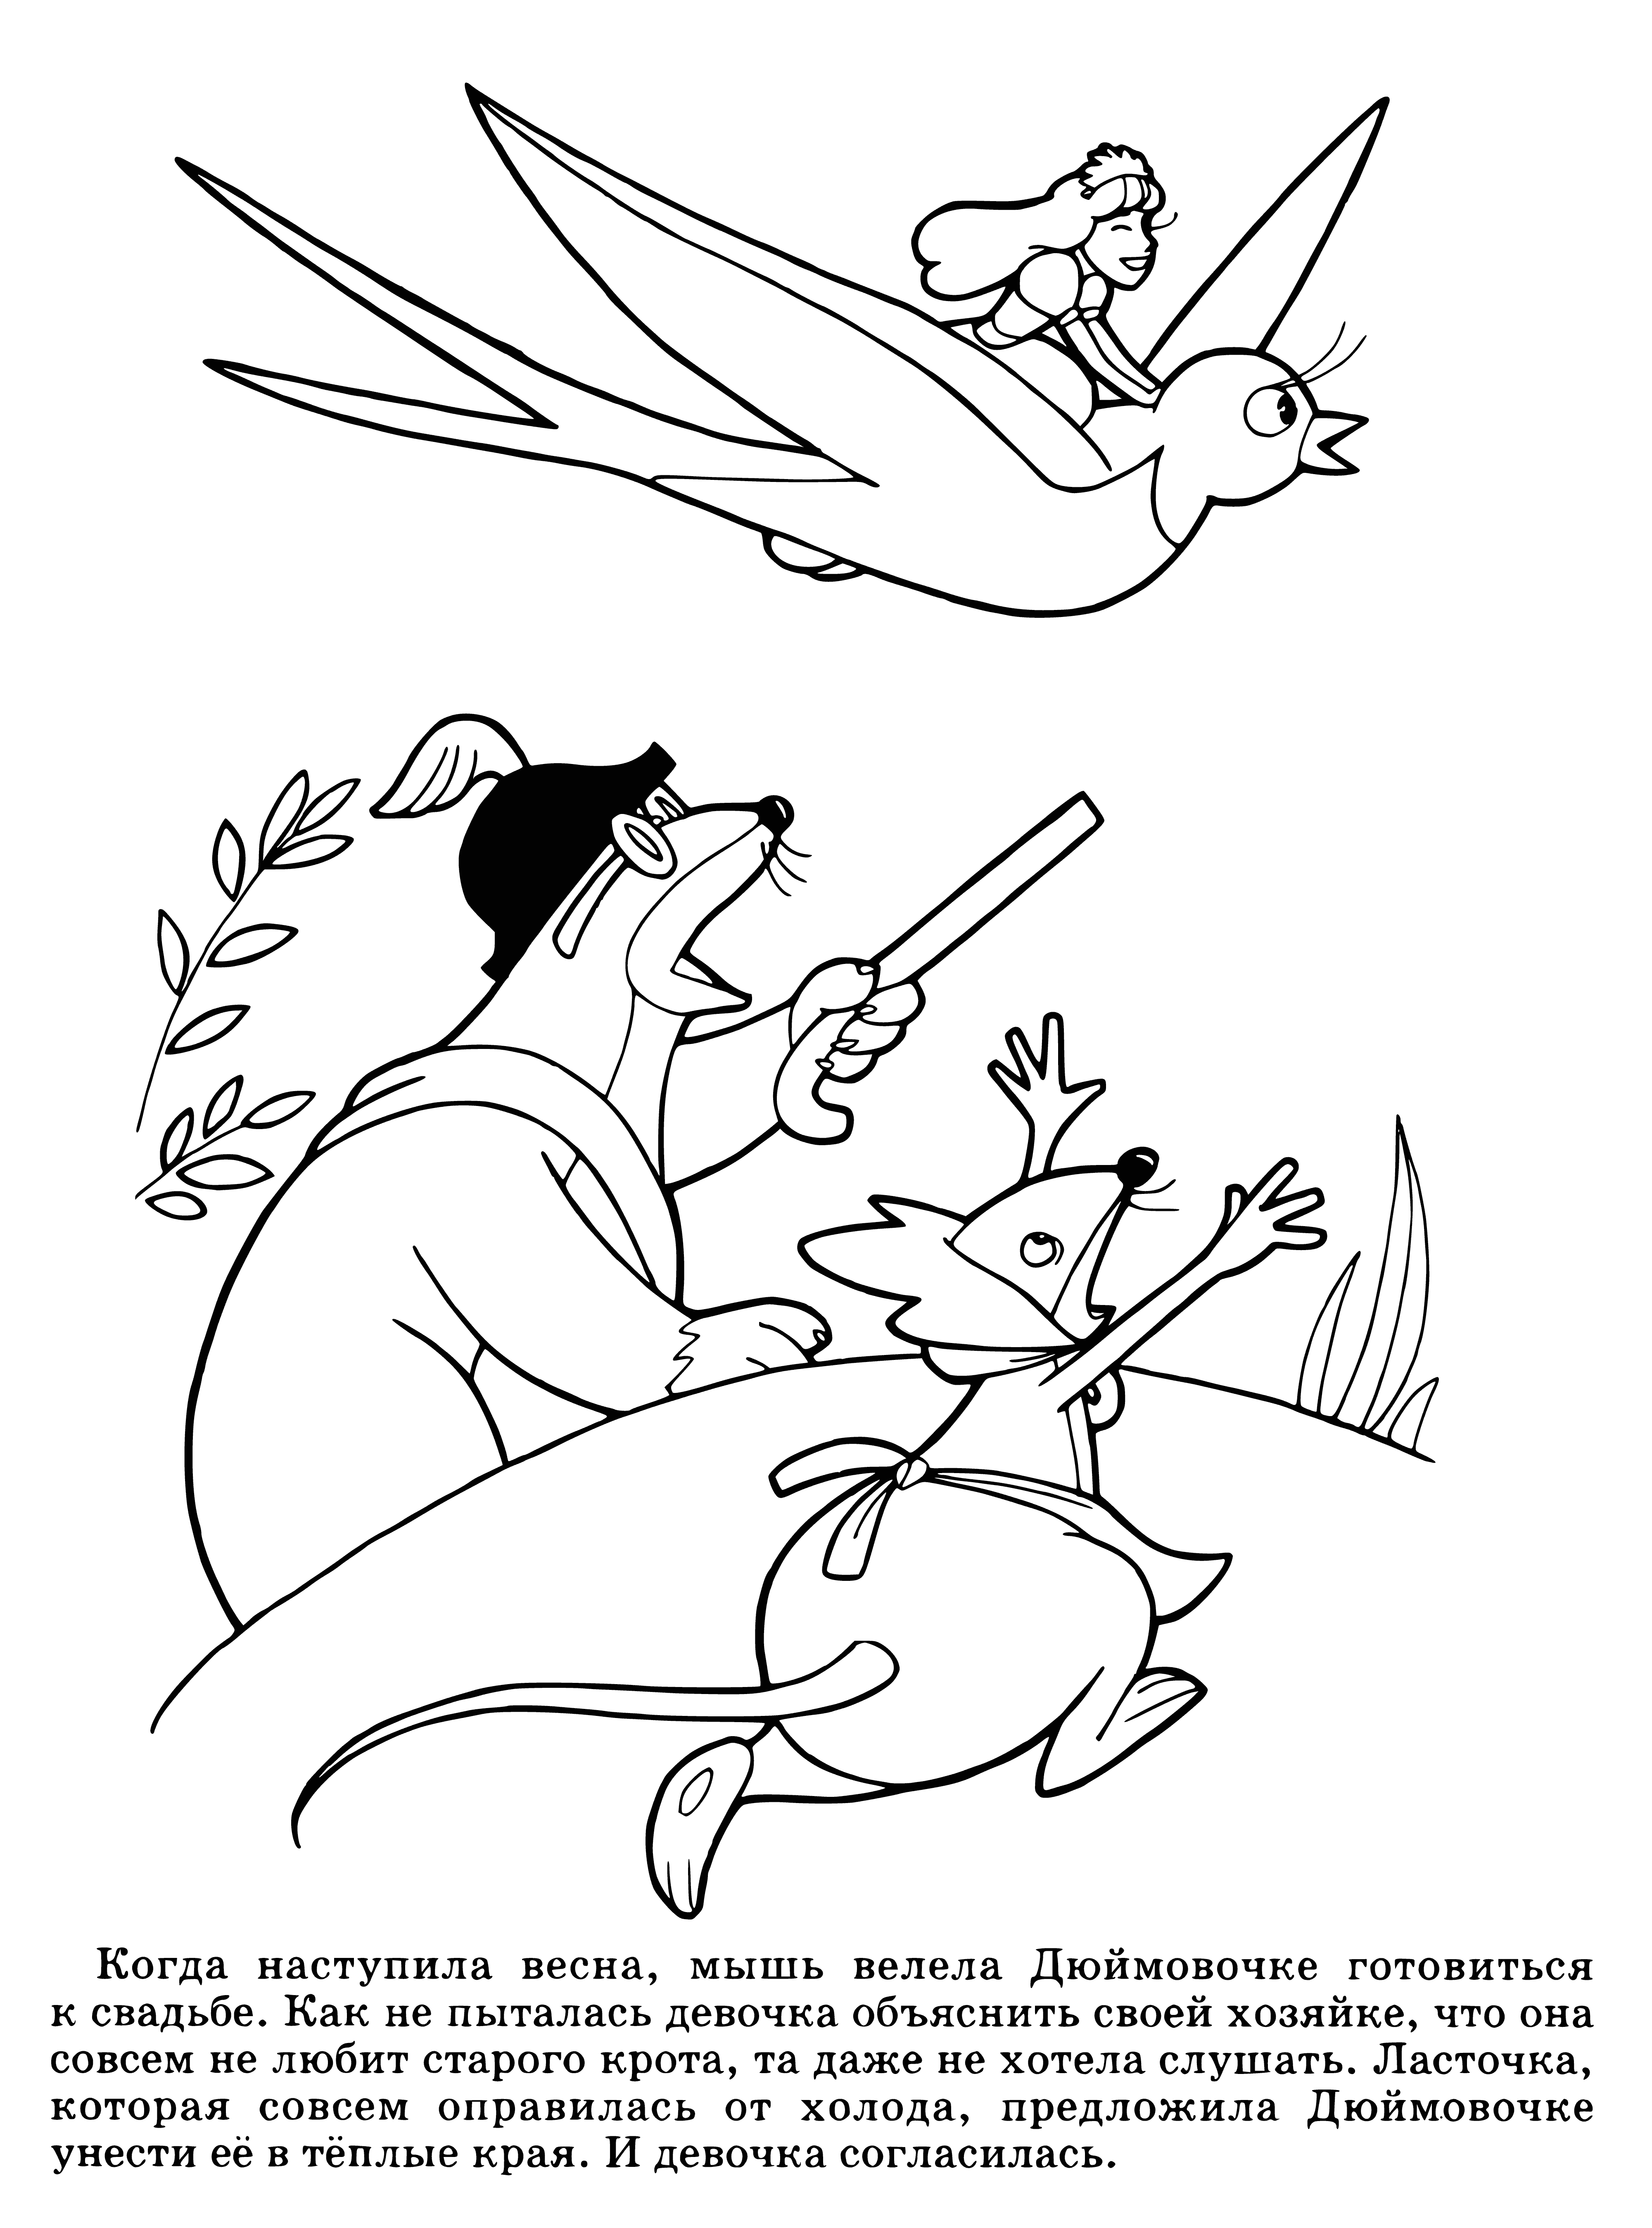 Thumbelina flies away coloring page